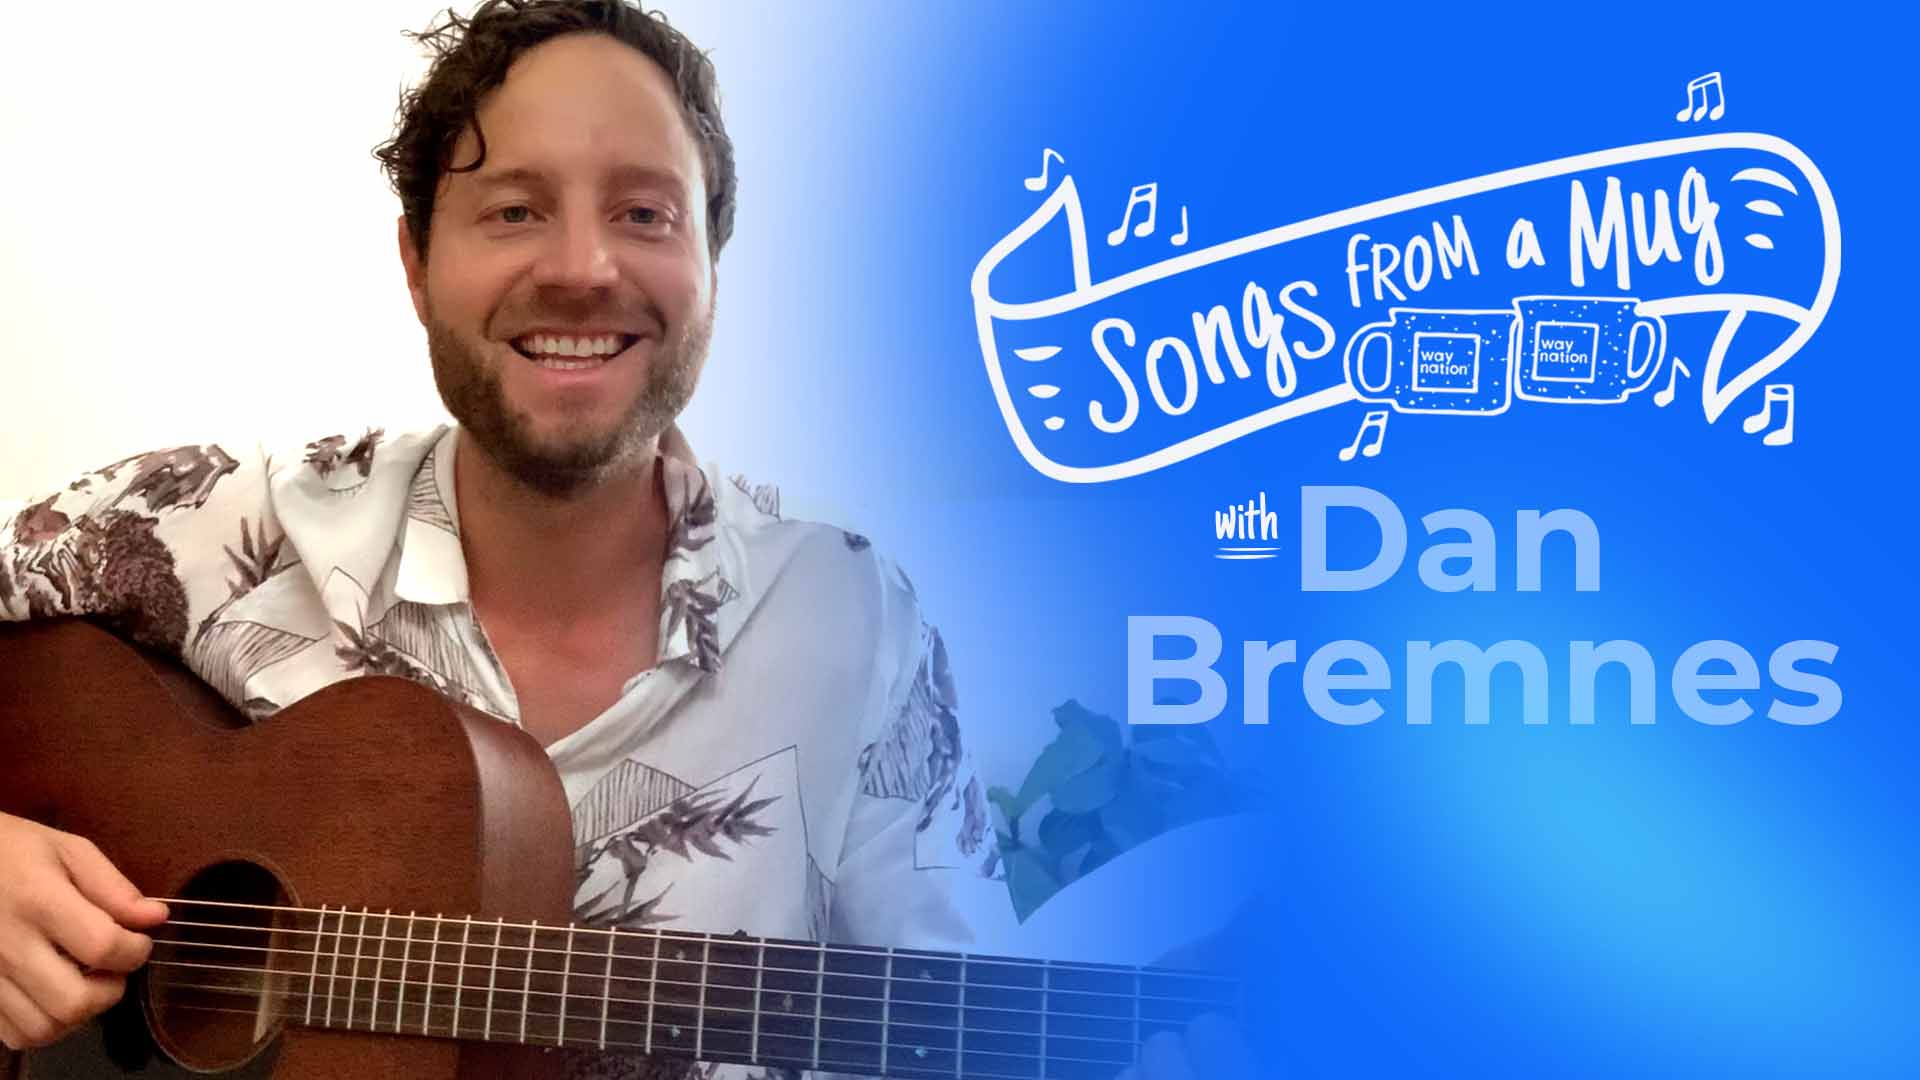 Dan Bremnes Songs From a Mug